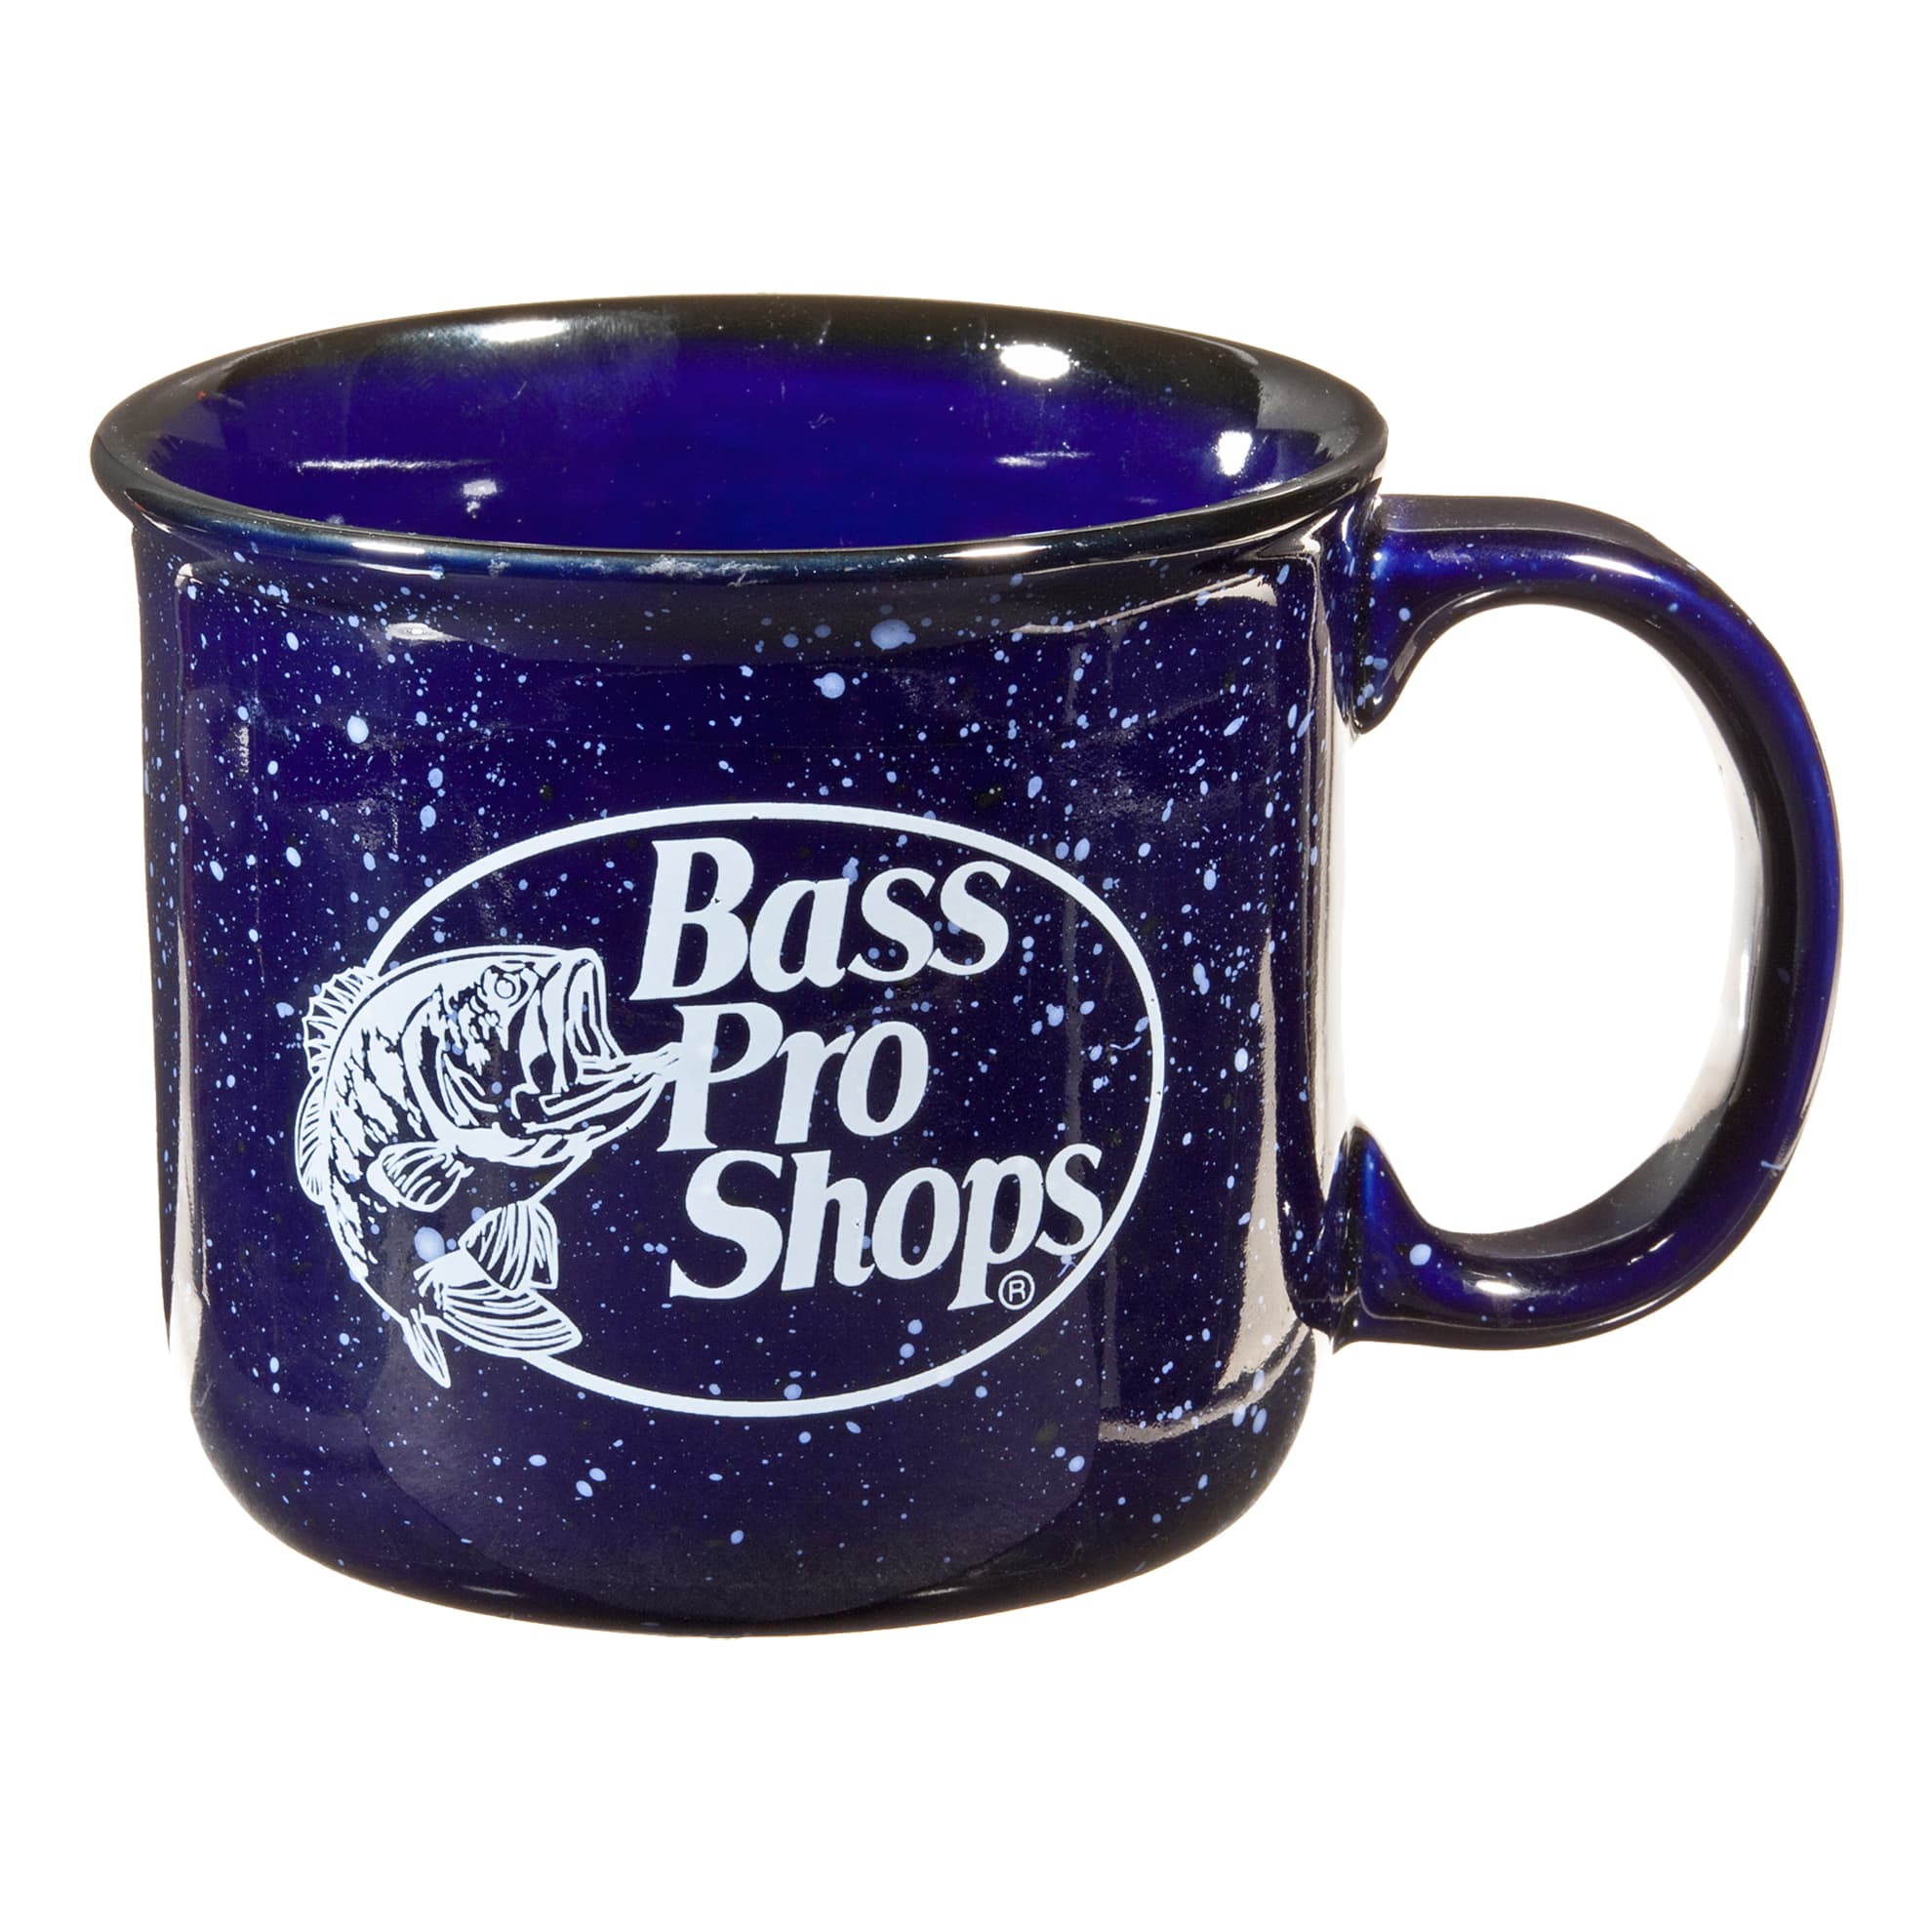 Bass Pro Shops Camp Mug - Cobalt Blue